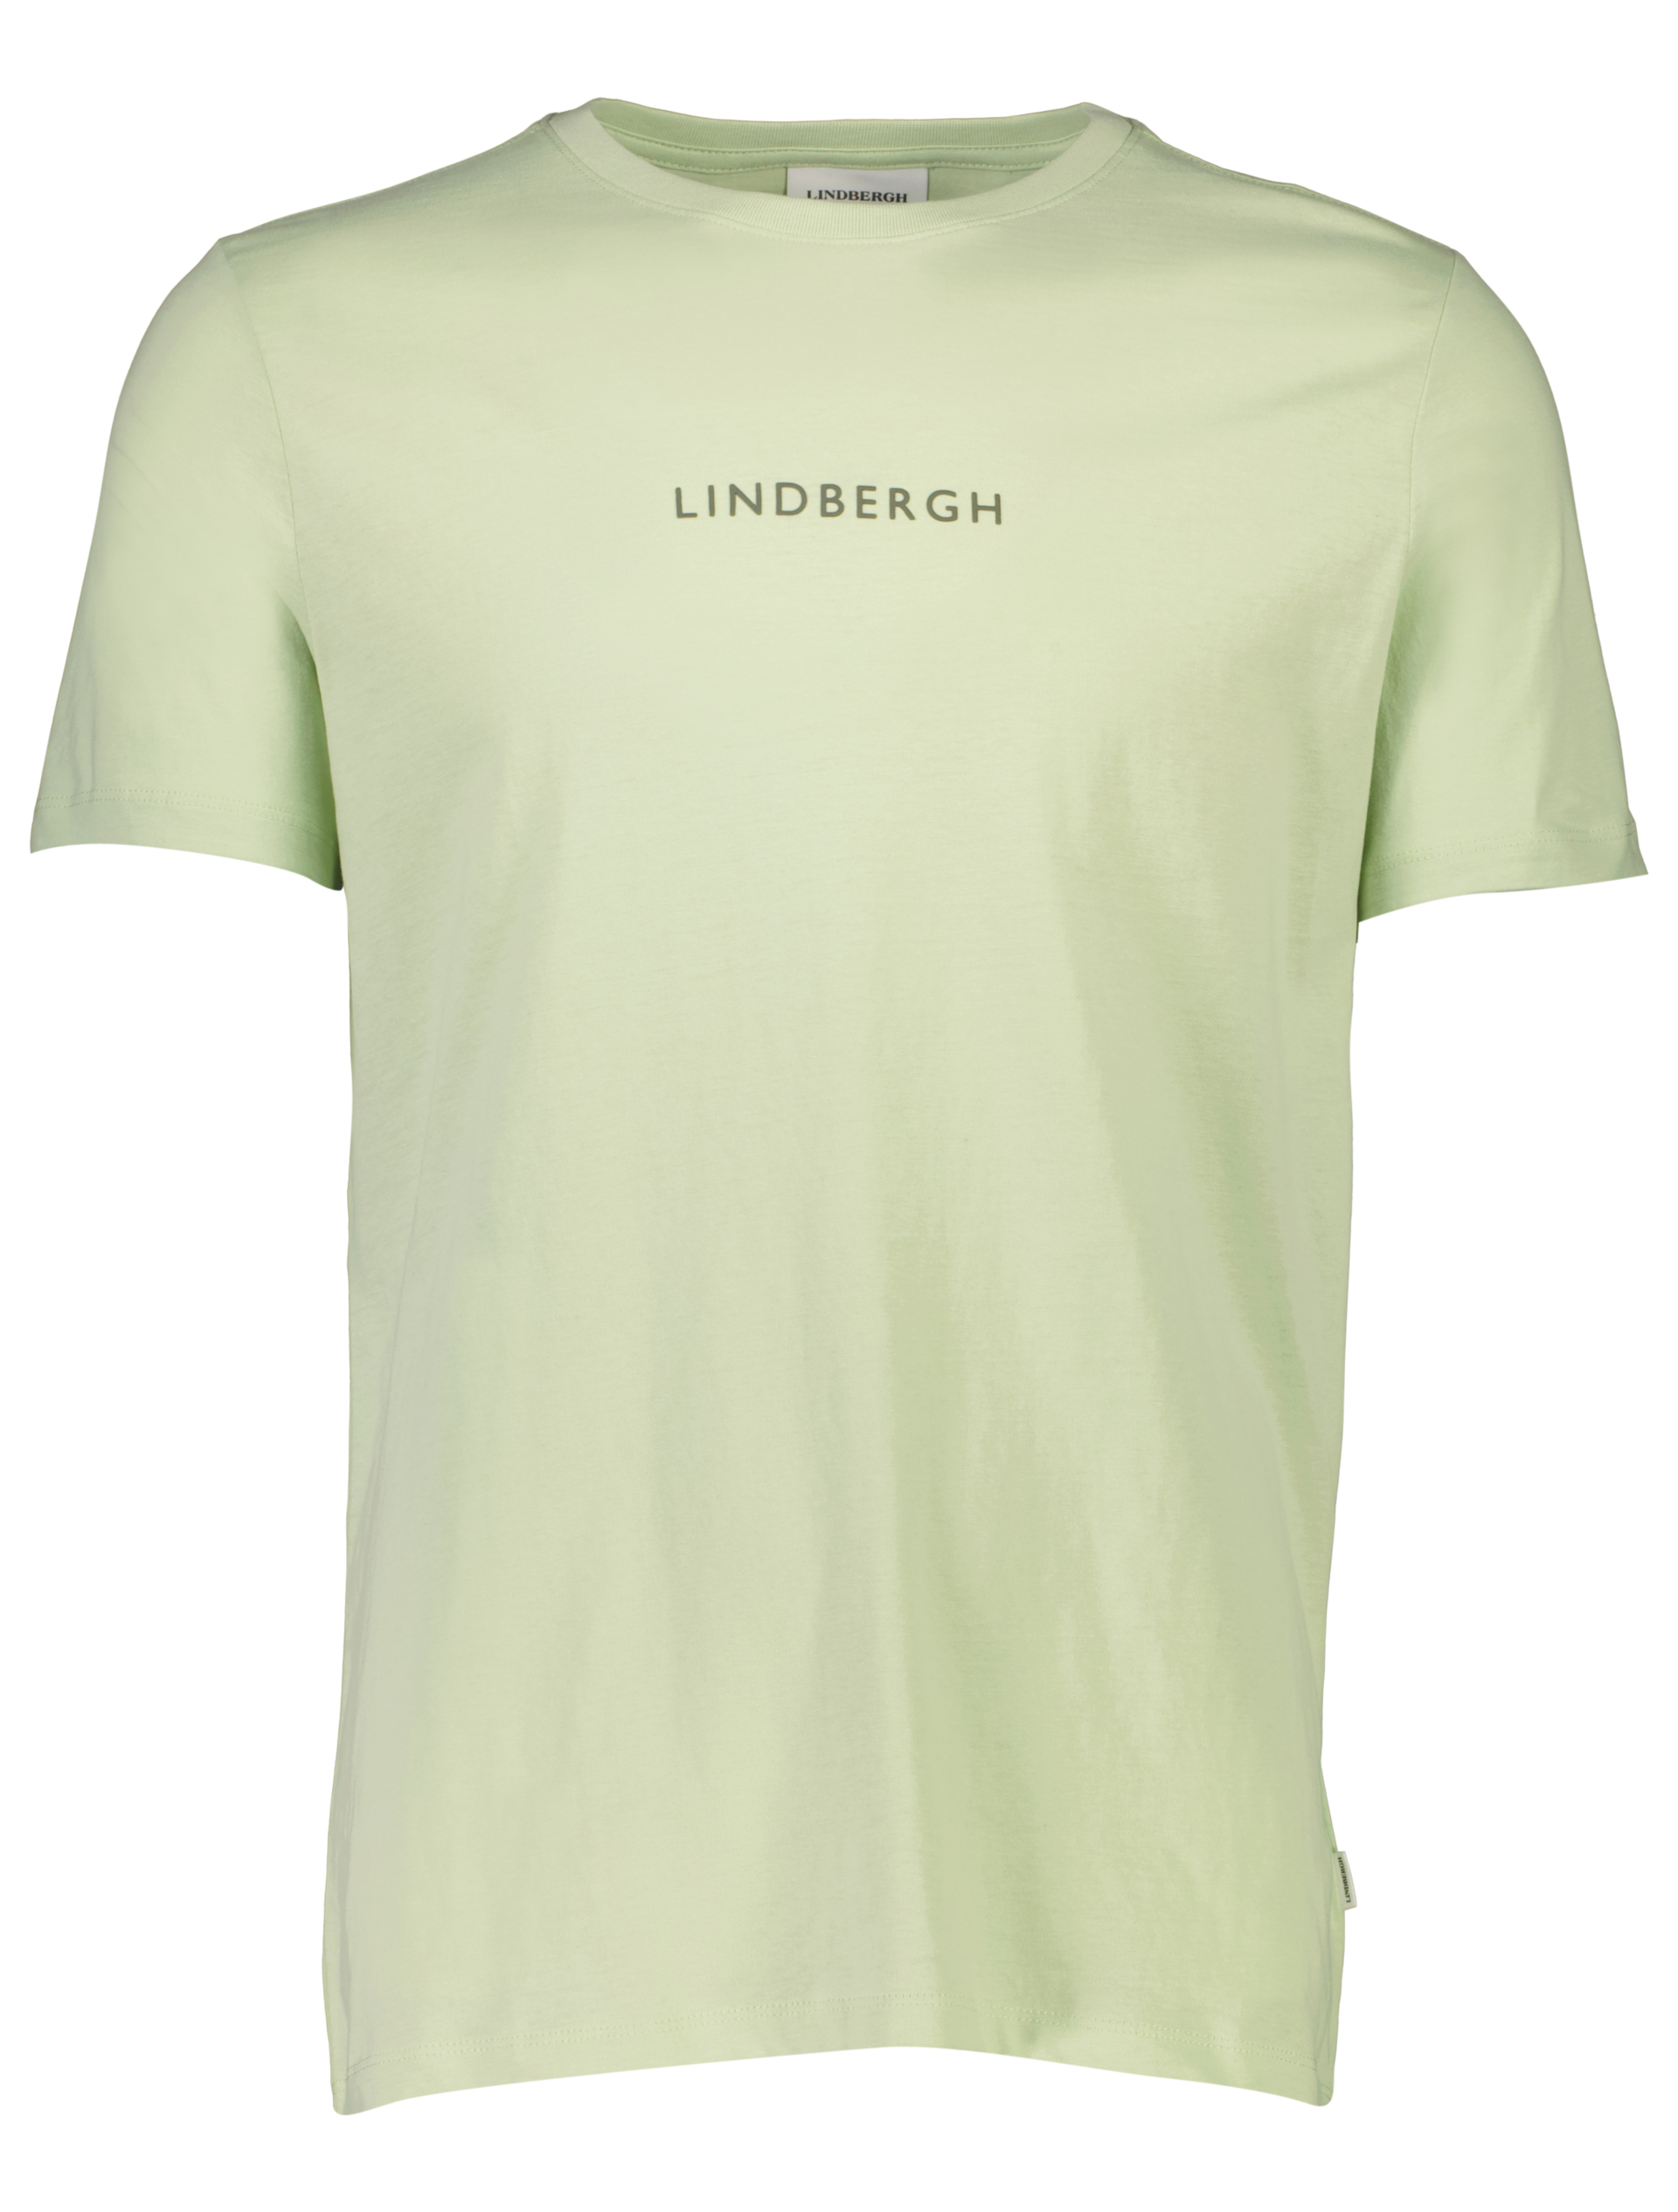 Lindbergh T-shirt grün / mint